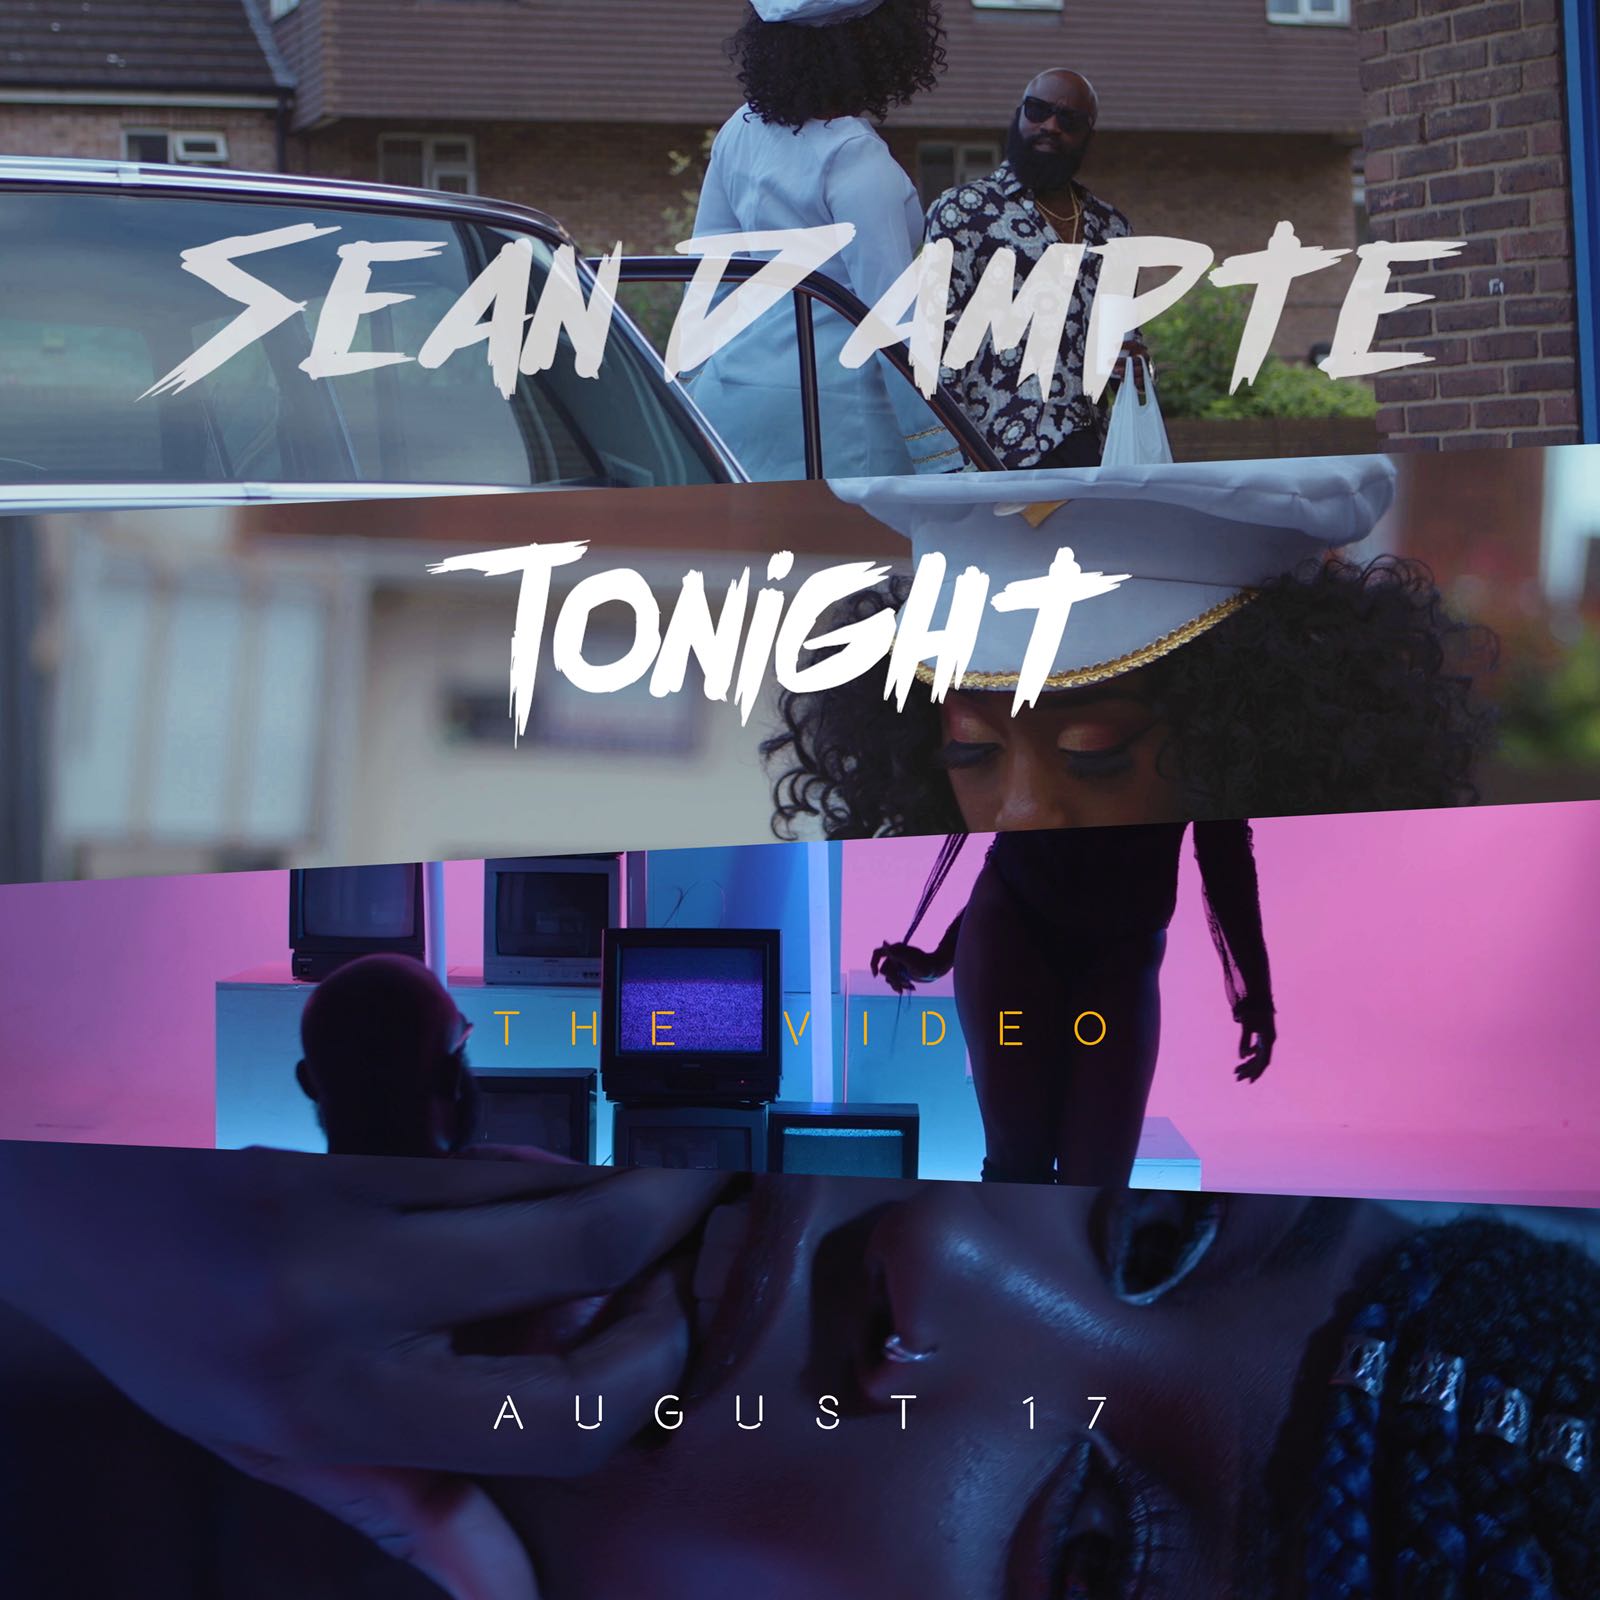 VIDEO: Sean Dampte – 2nite